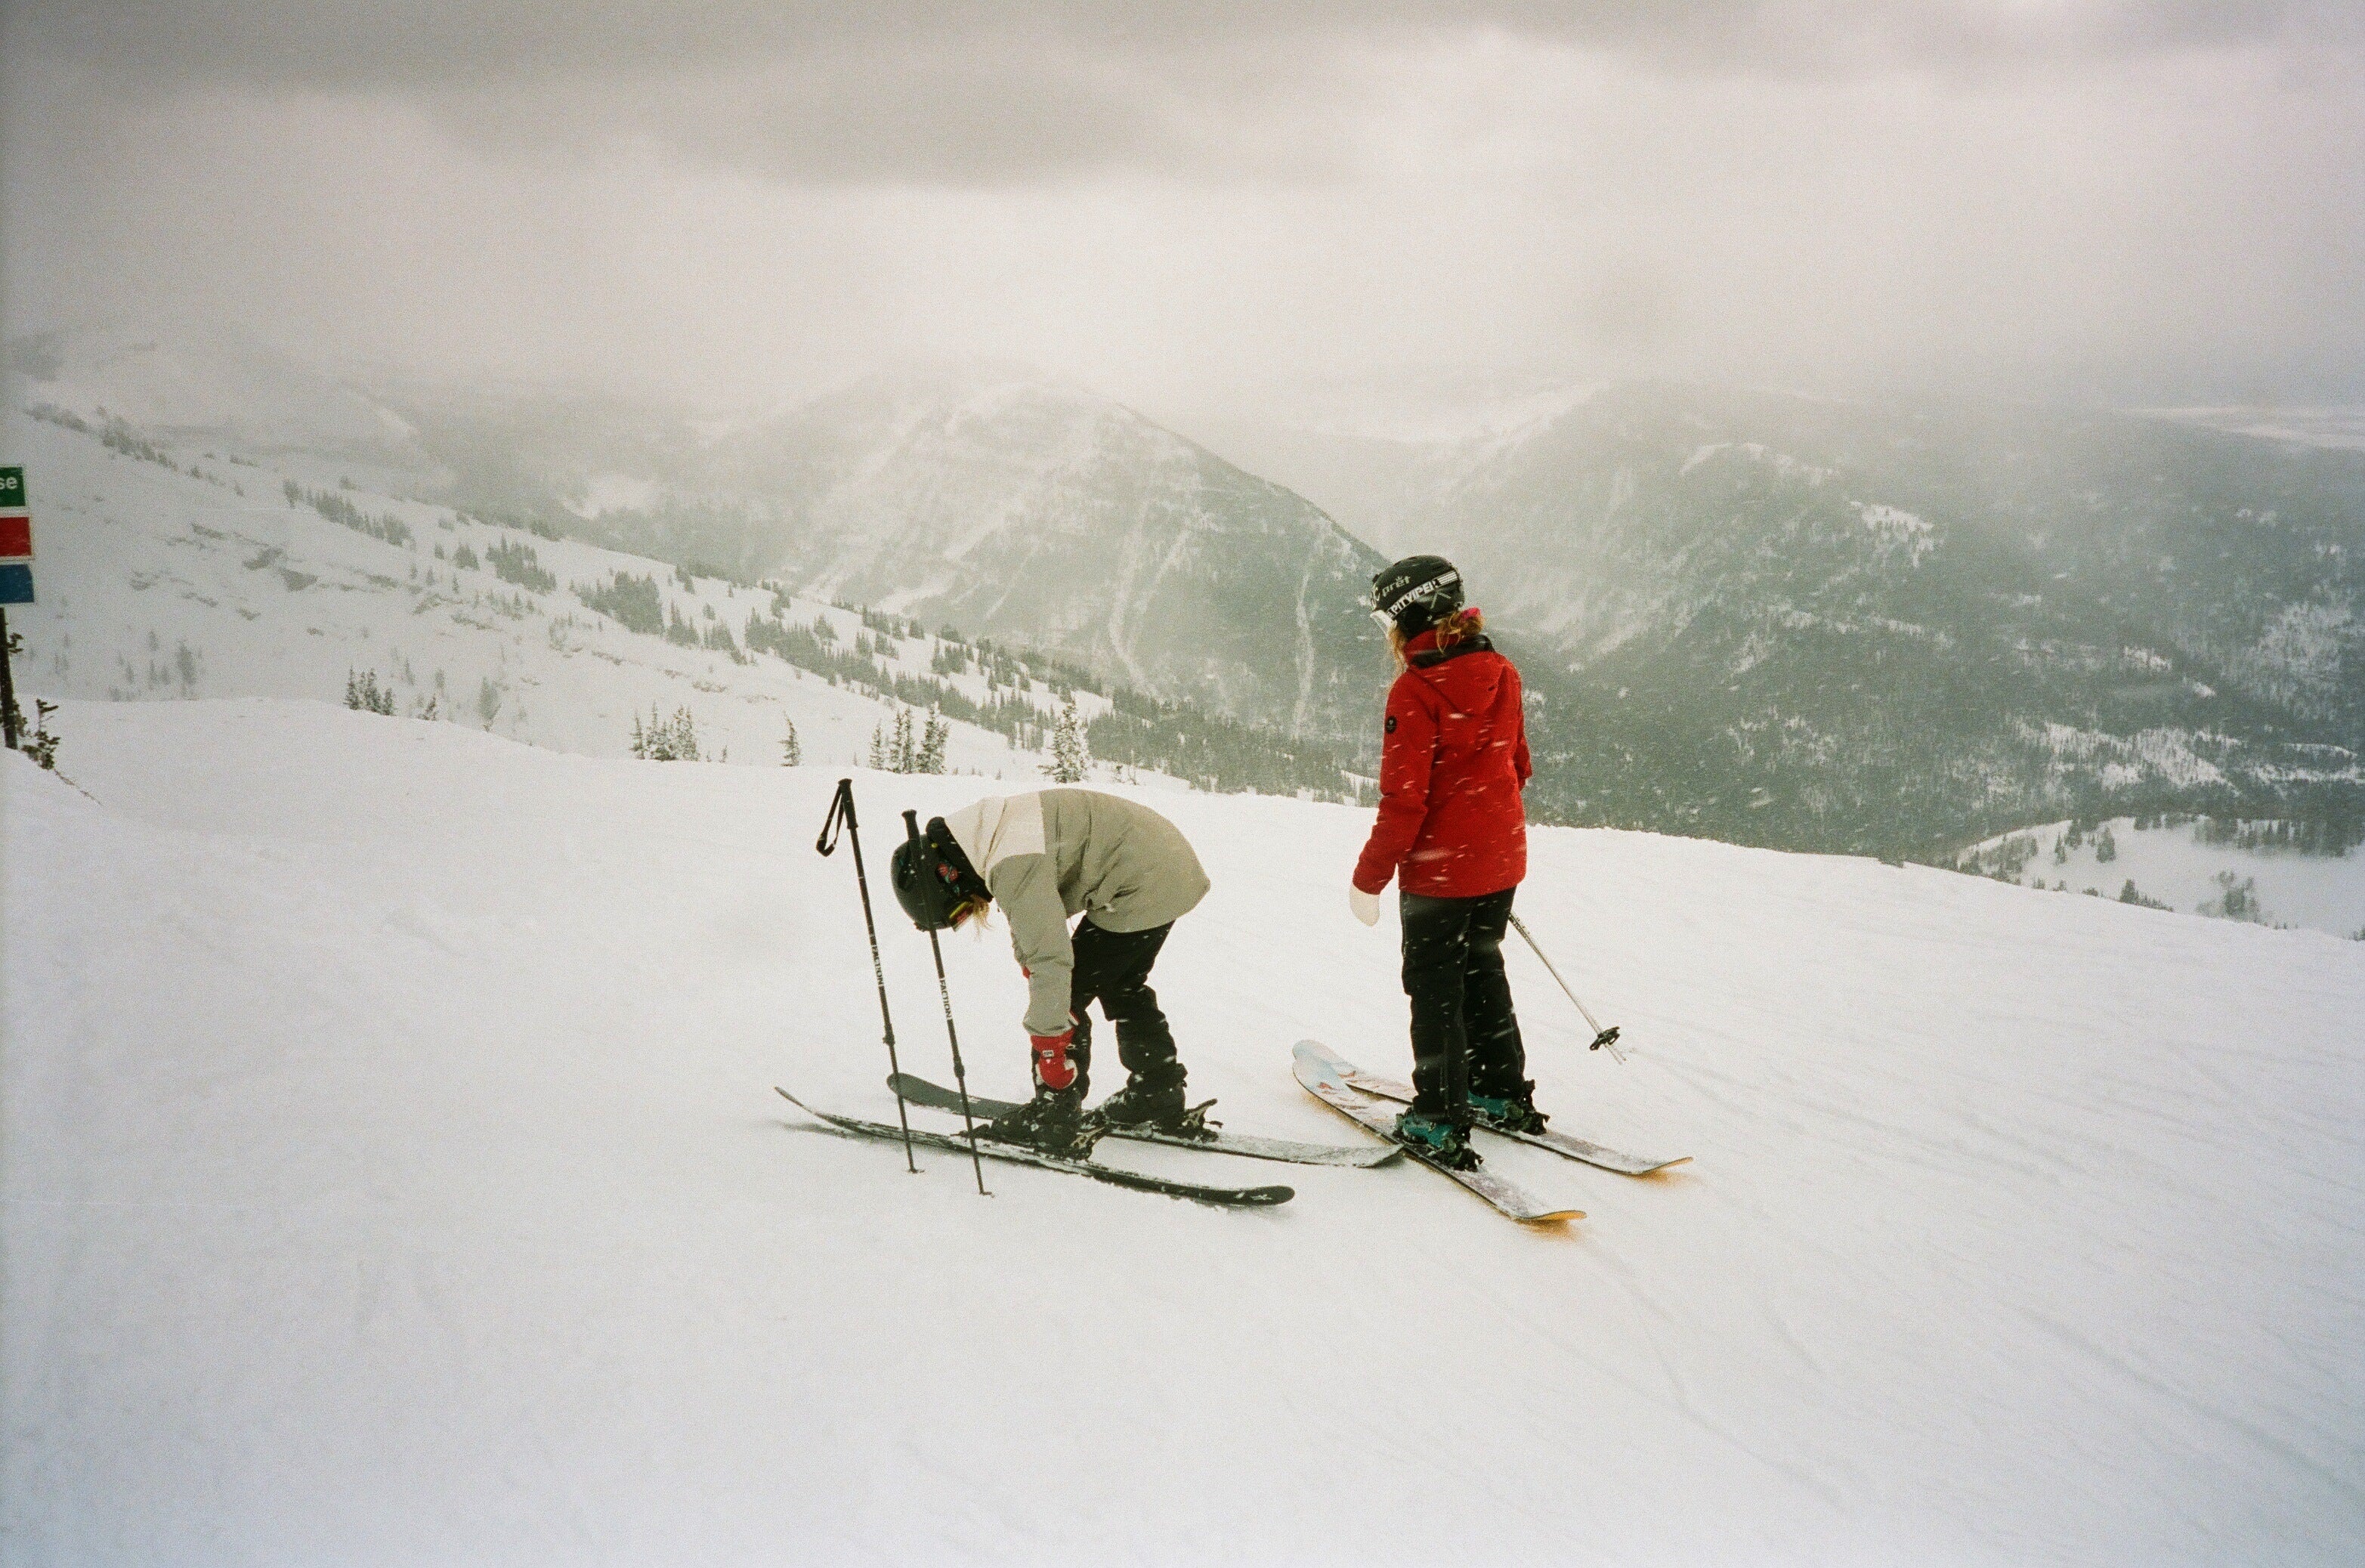 Two friends preparing to ski down a mountain